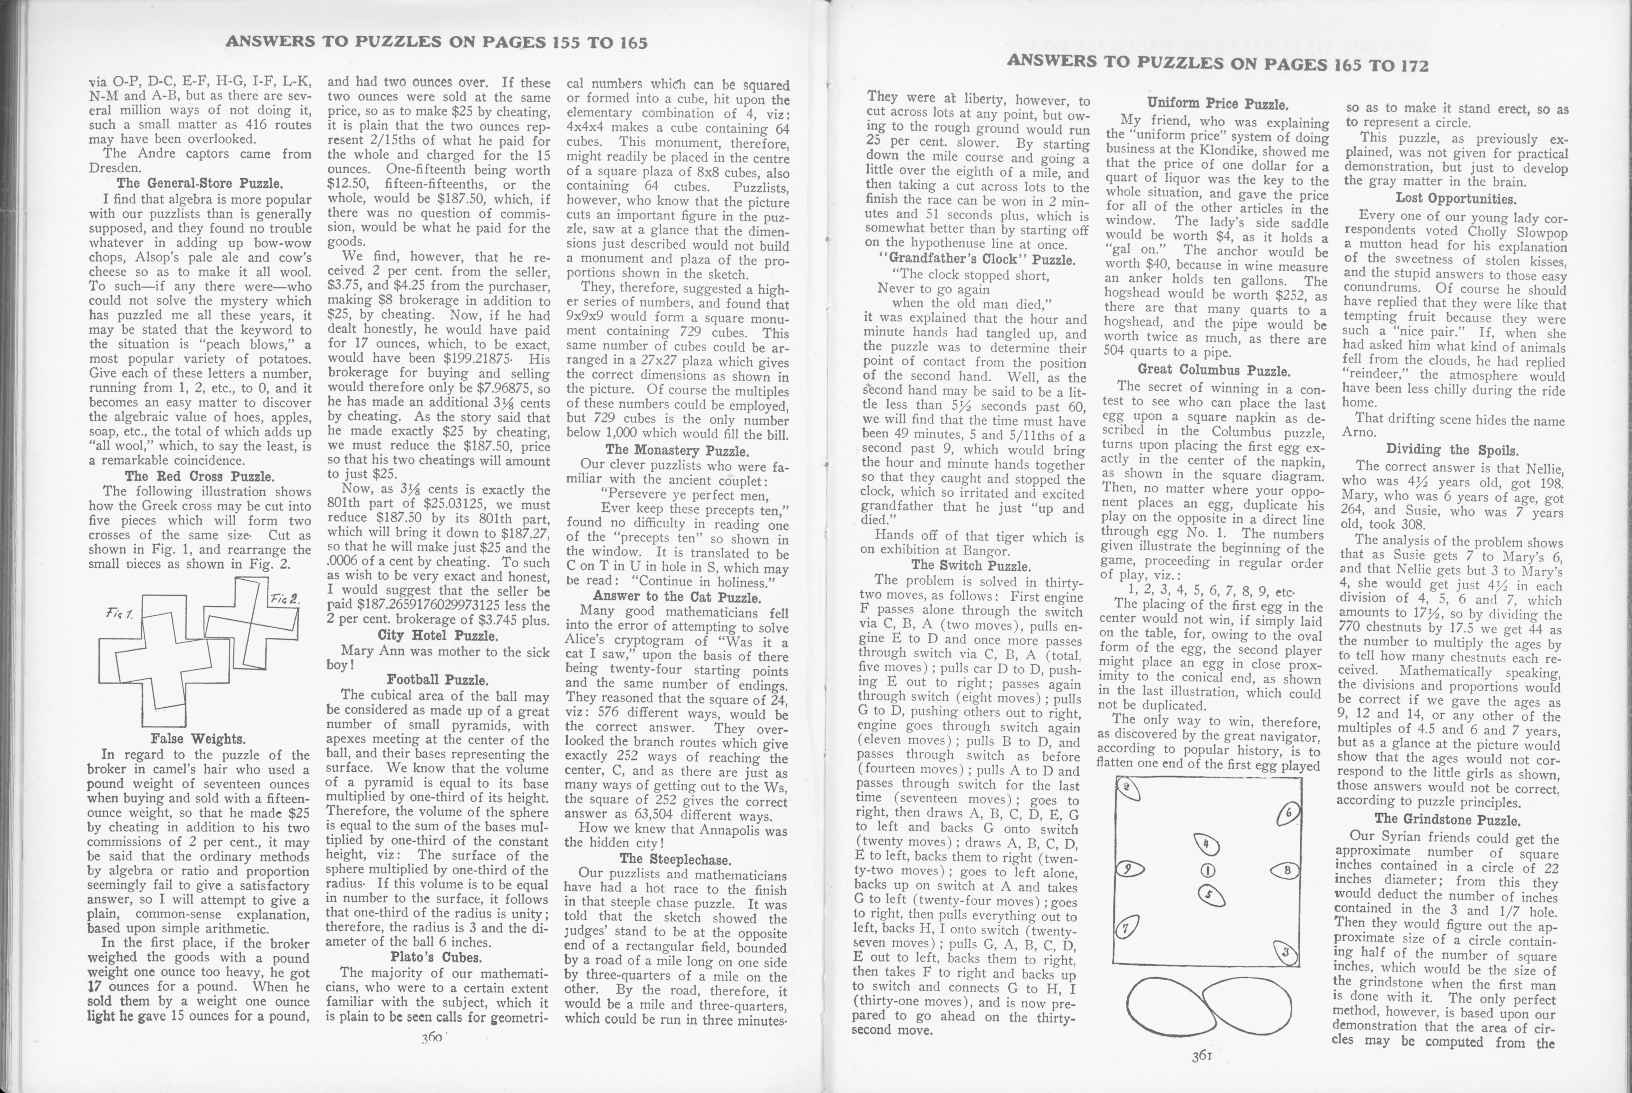 Sam Loyd - Cyclopedia of Puzzles - page 360-361